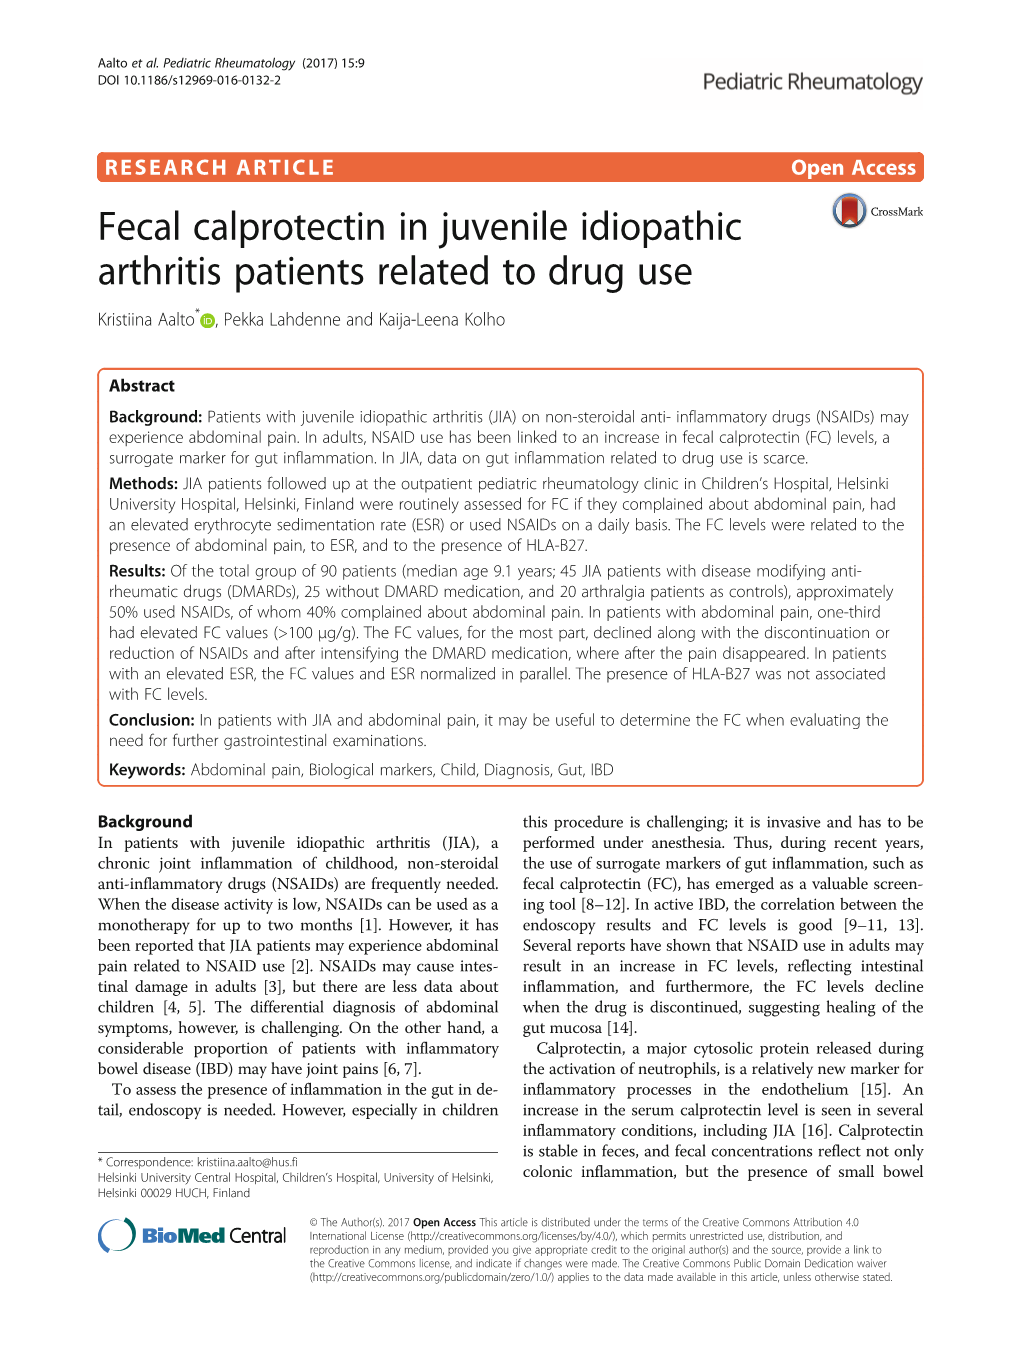 Fecal Calprotectin in Juvenile Idiopathic Arthritis Patients Related to Drug Use Kristiina Aalto* , Pekka Lahdenne and Kaija-Leena Kolho